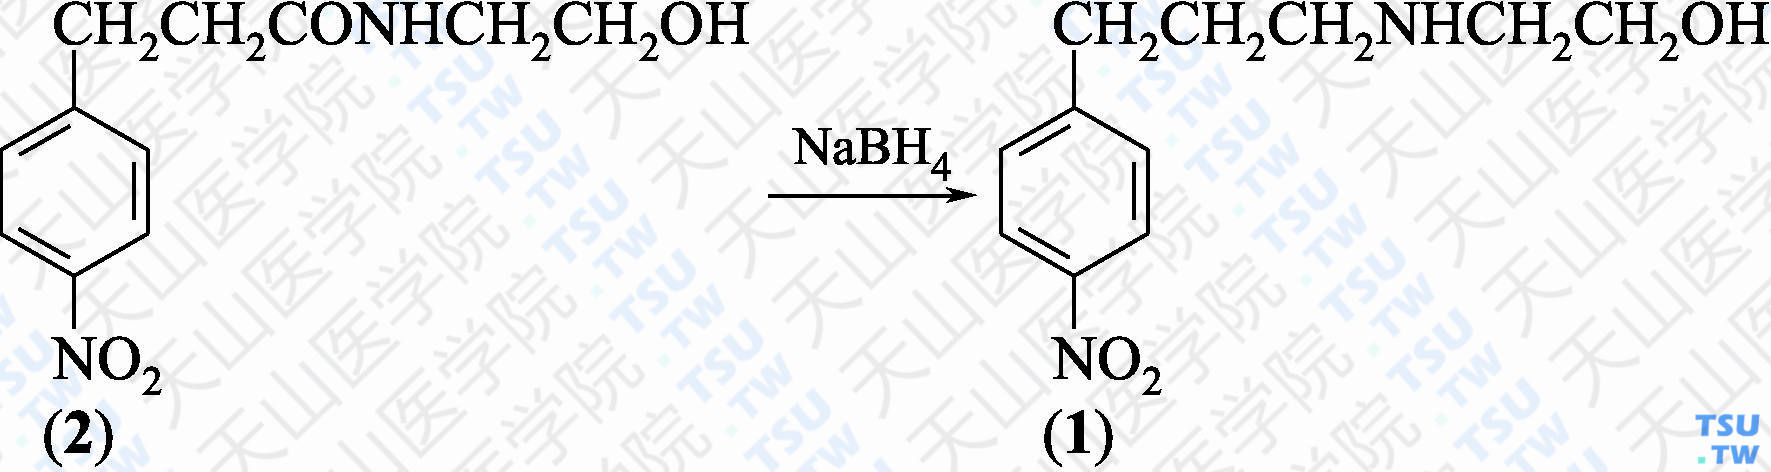 2-[3-（4-硝基苯基）丙基氨基]乙醇（分子式：C<sub>11</sub>H<sub>16</sub>N<sub>2</sub>O<sub>3</sub>）的合成方法路线及其结构式